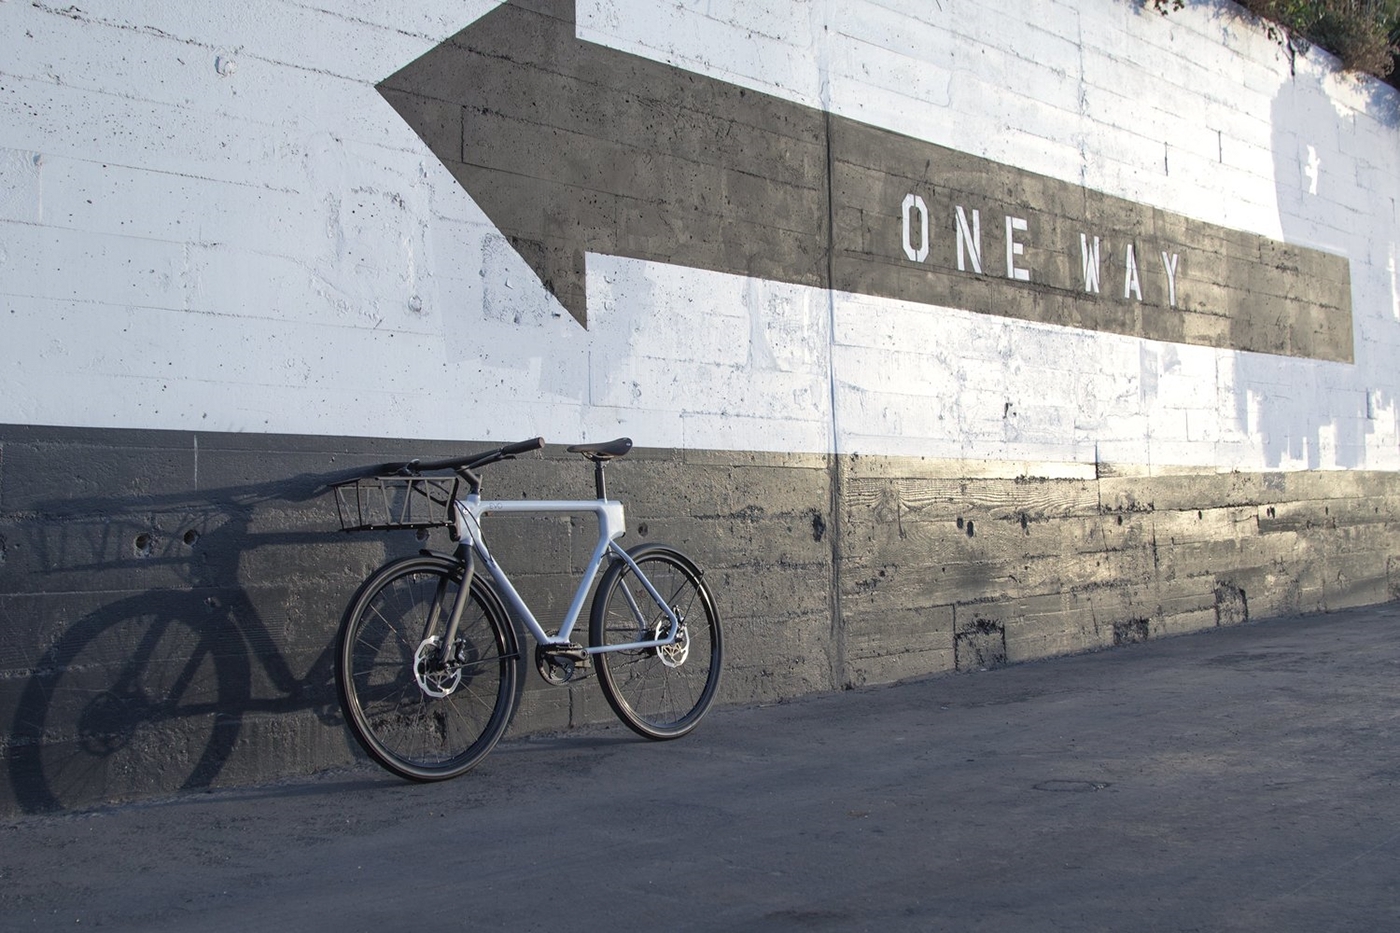 Evo bike创意自行车设计